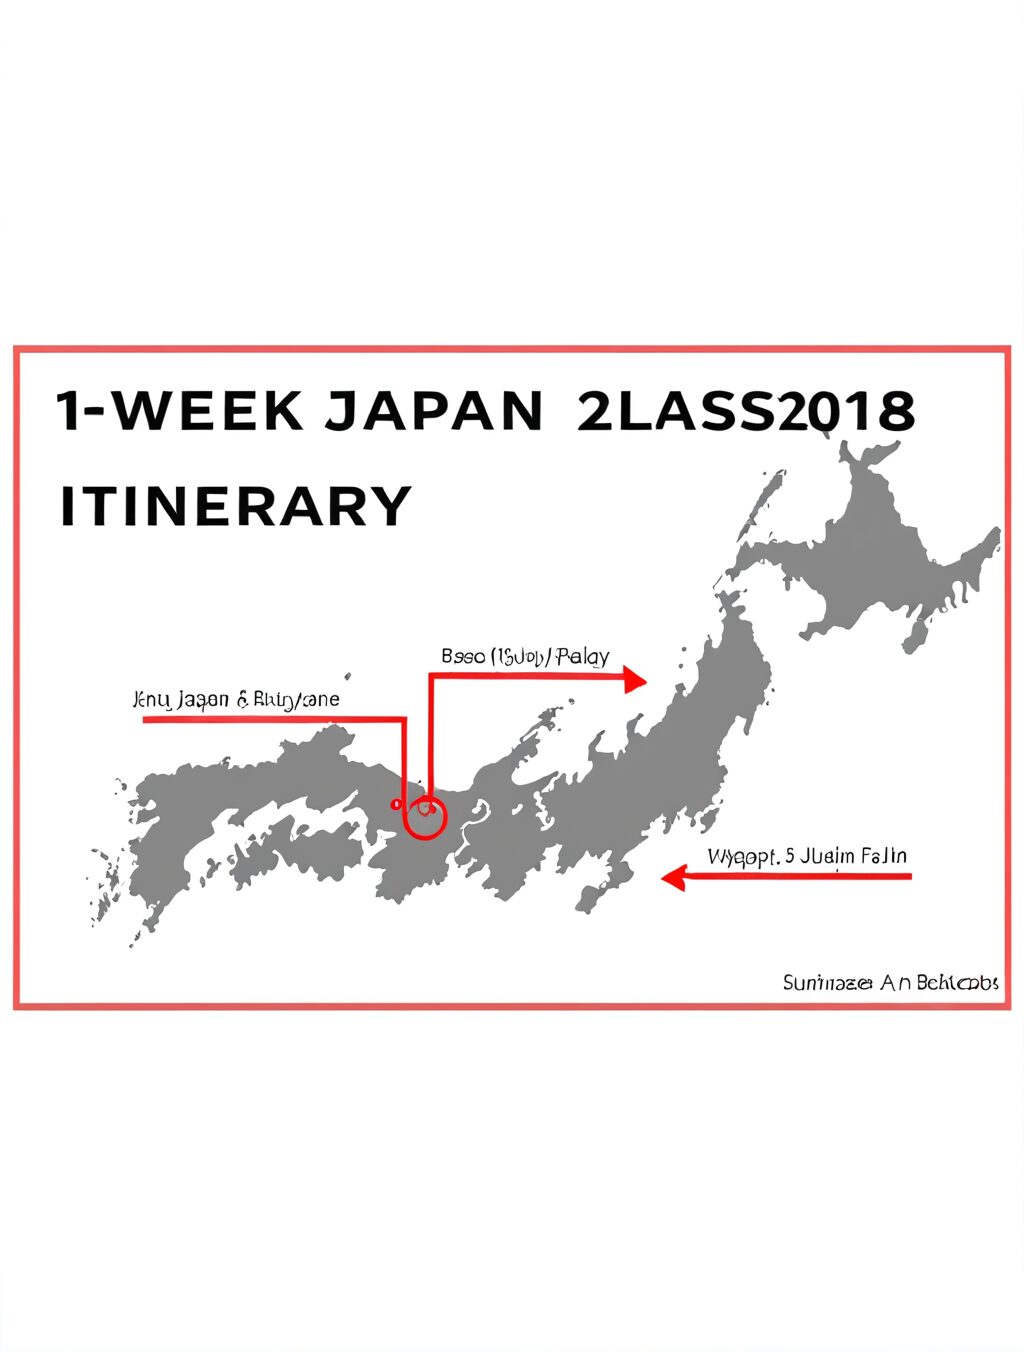 best 1 week japan itinerary